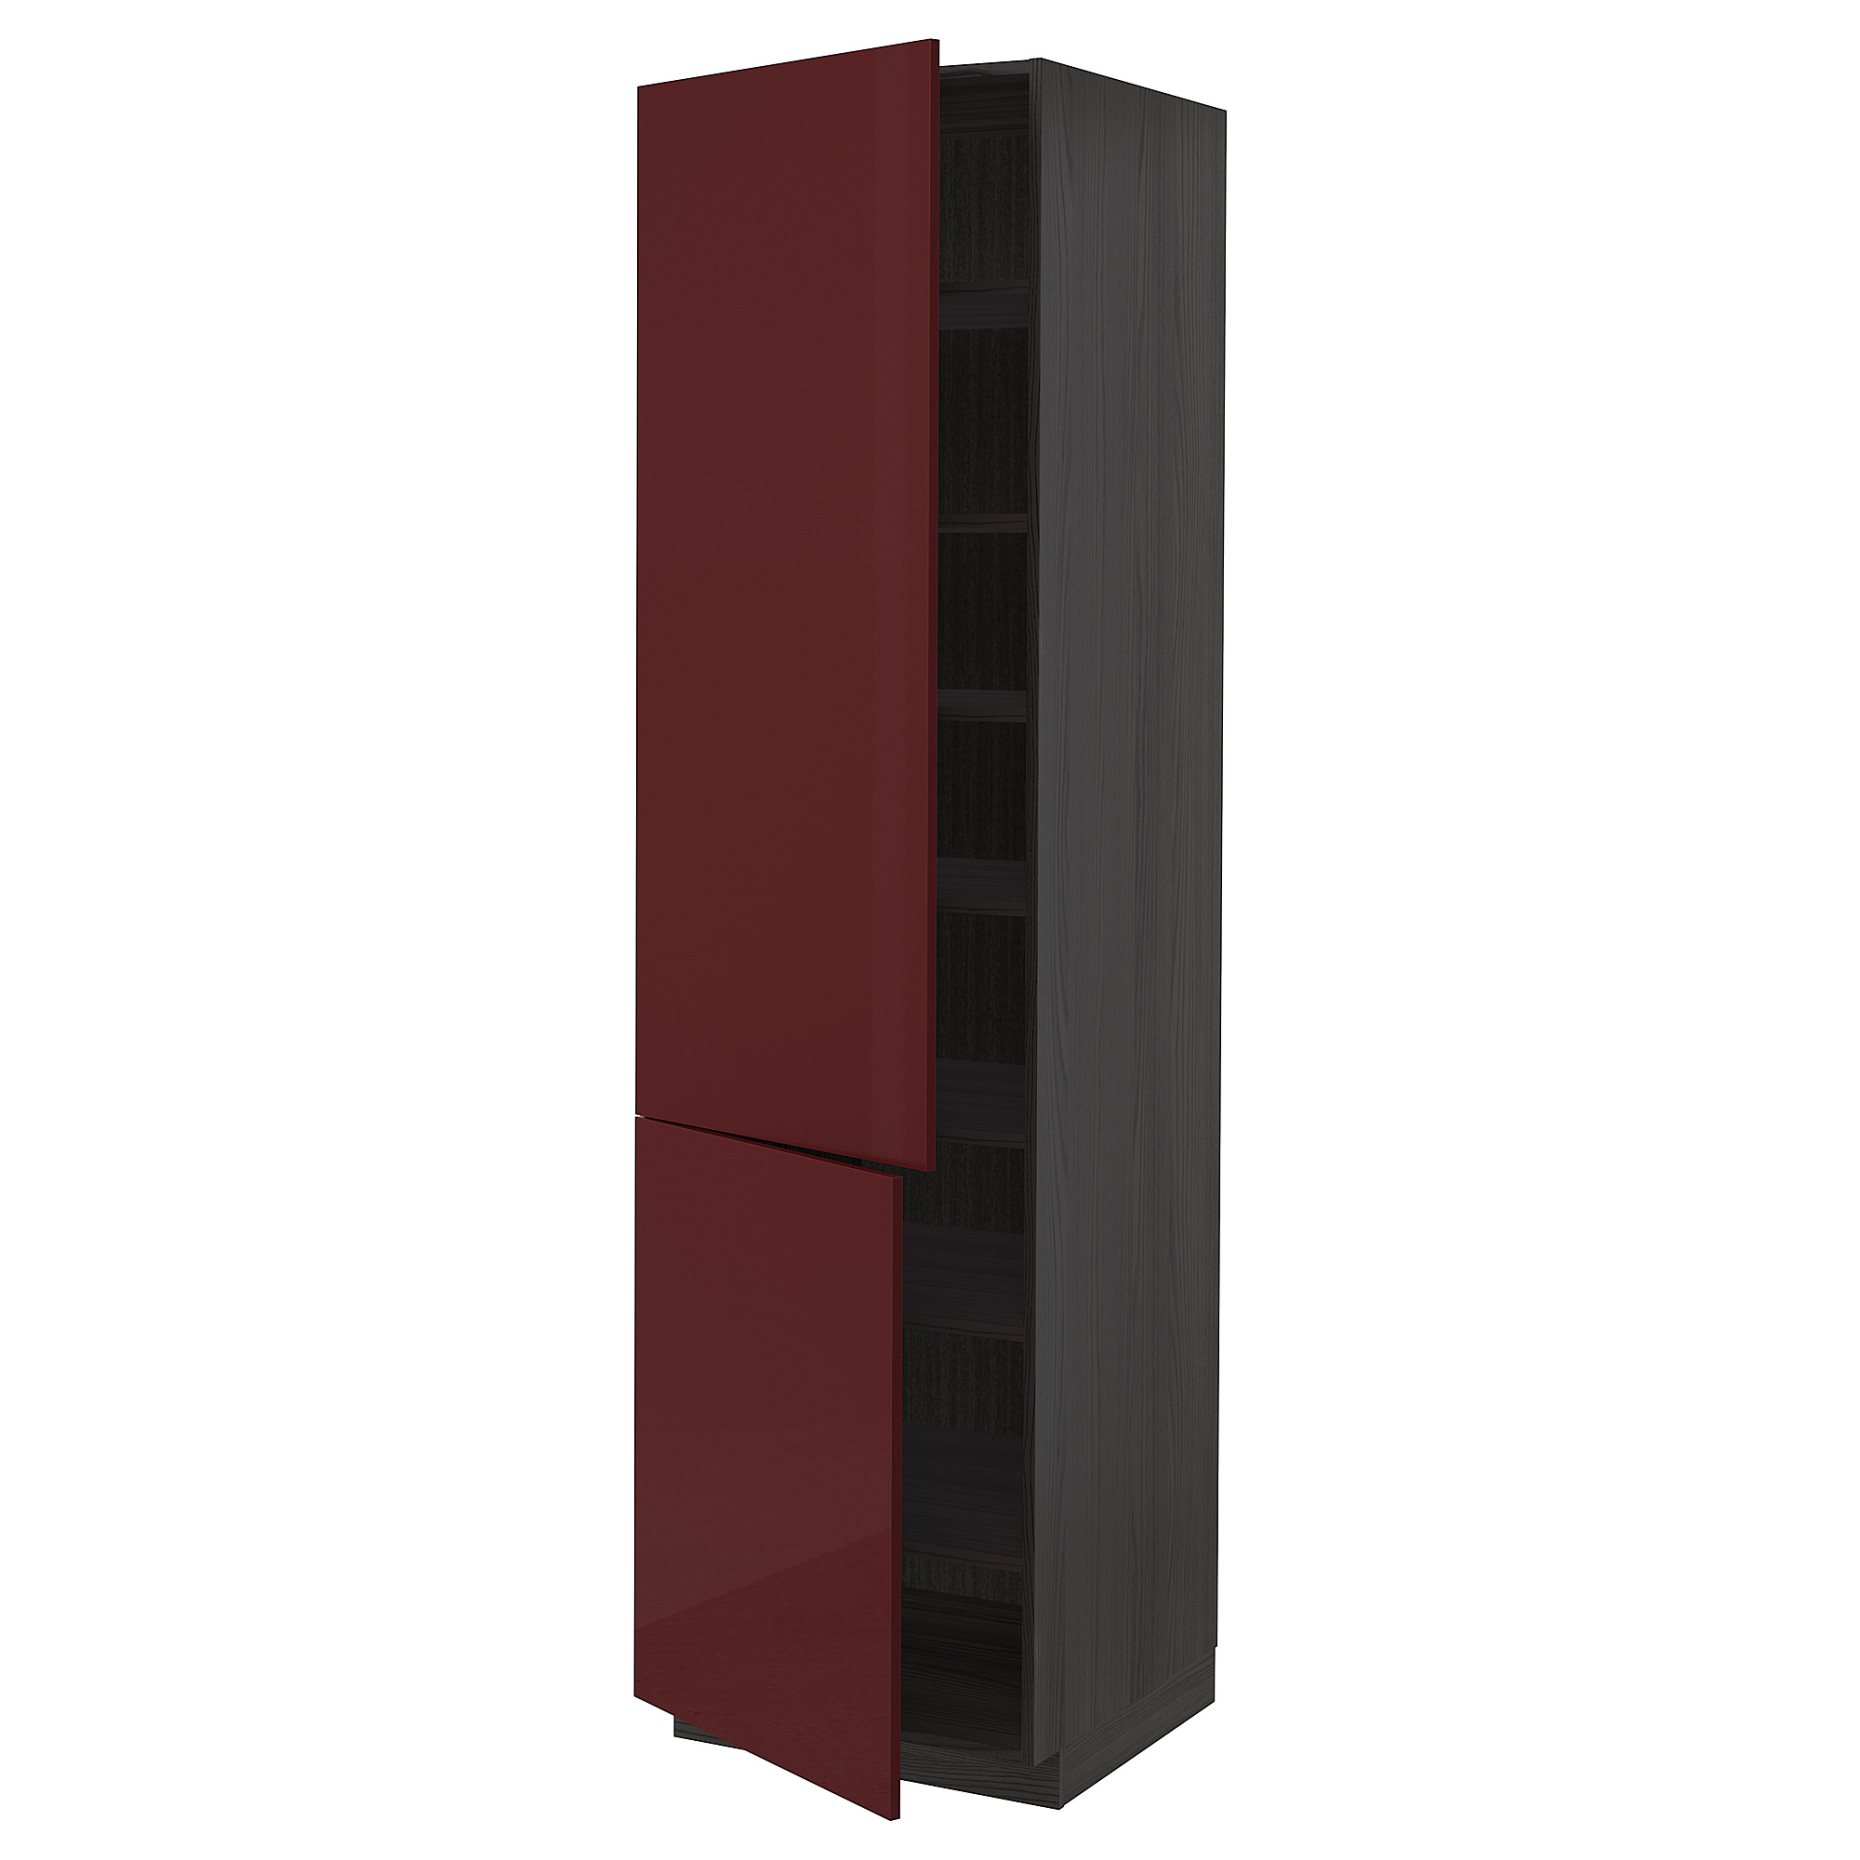 METOD, ψηλό ντουλάπι με ράφια/2 πόρτες, 60x60x220 cm, 694.558.37